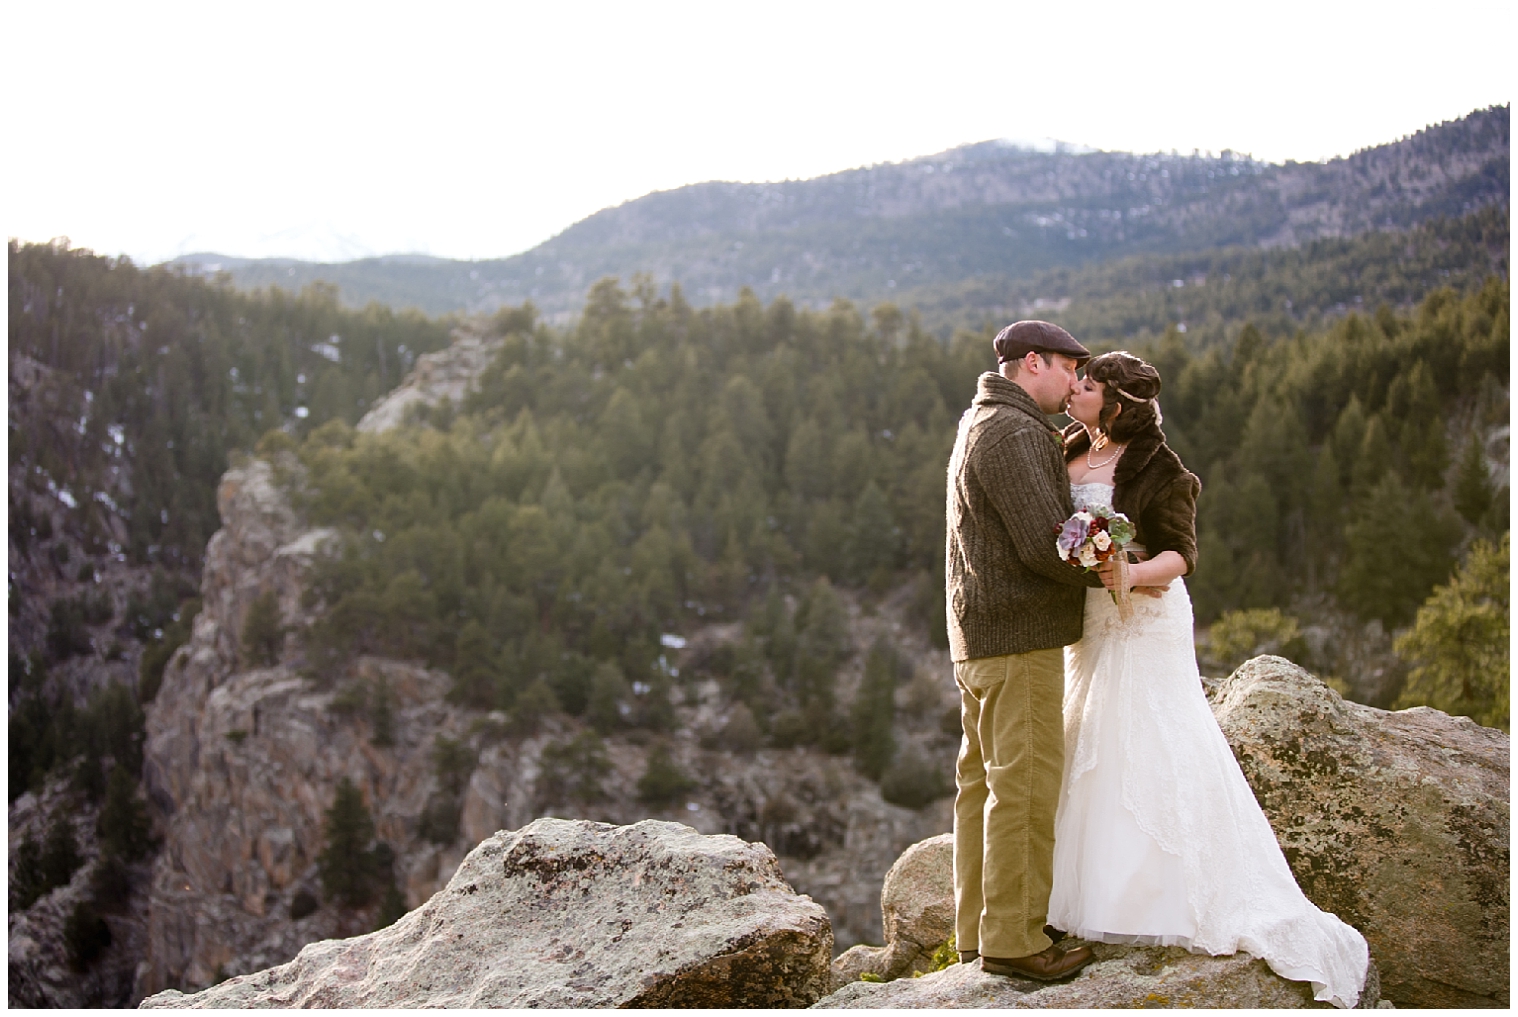 Portraits at a Boulder Colorado mountain elopement.